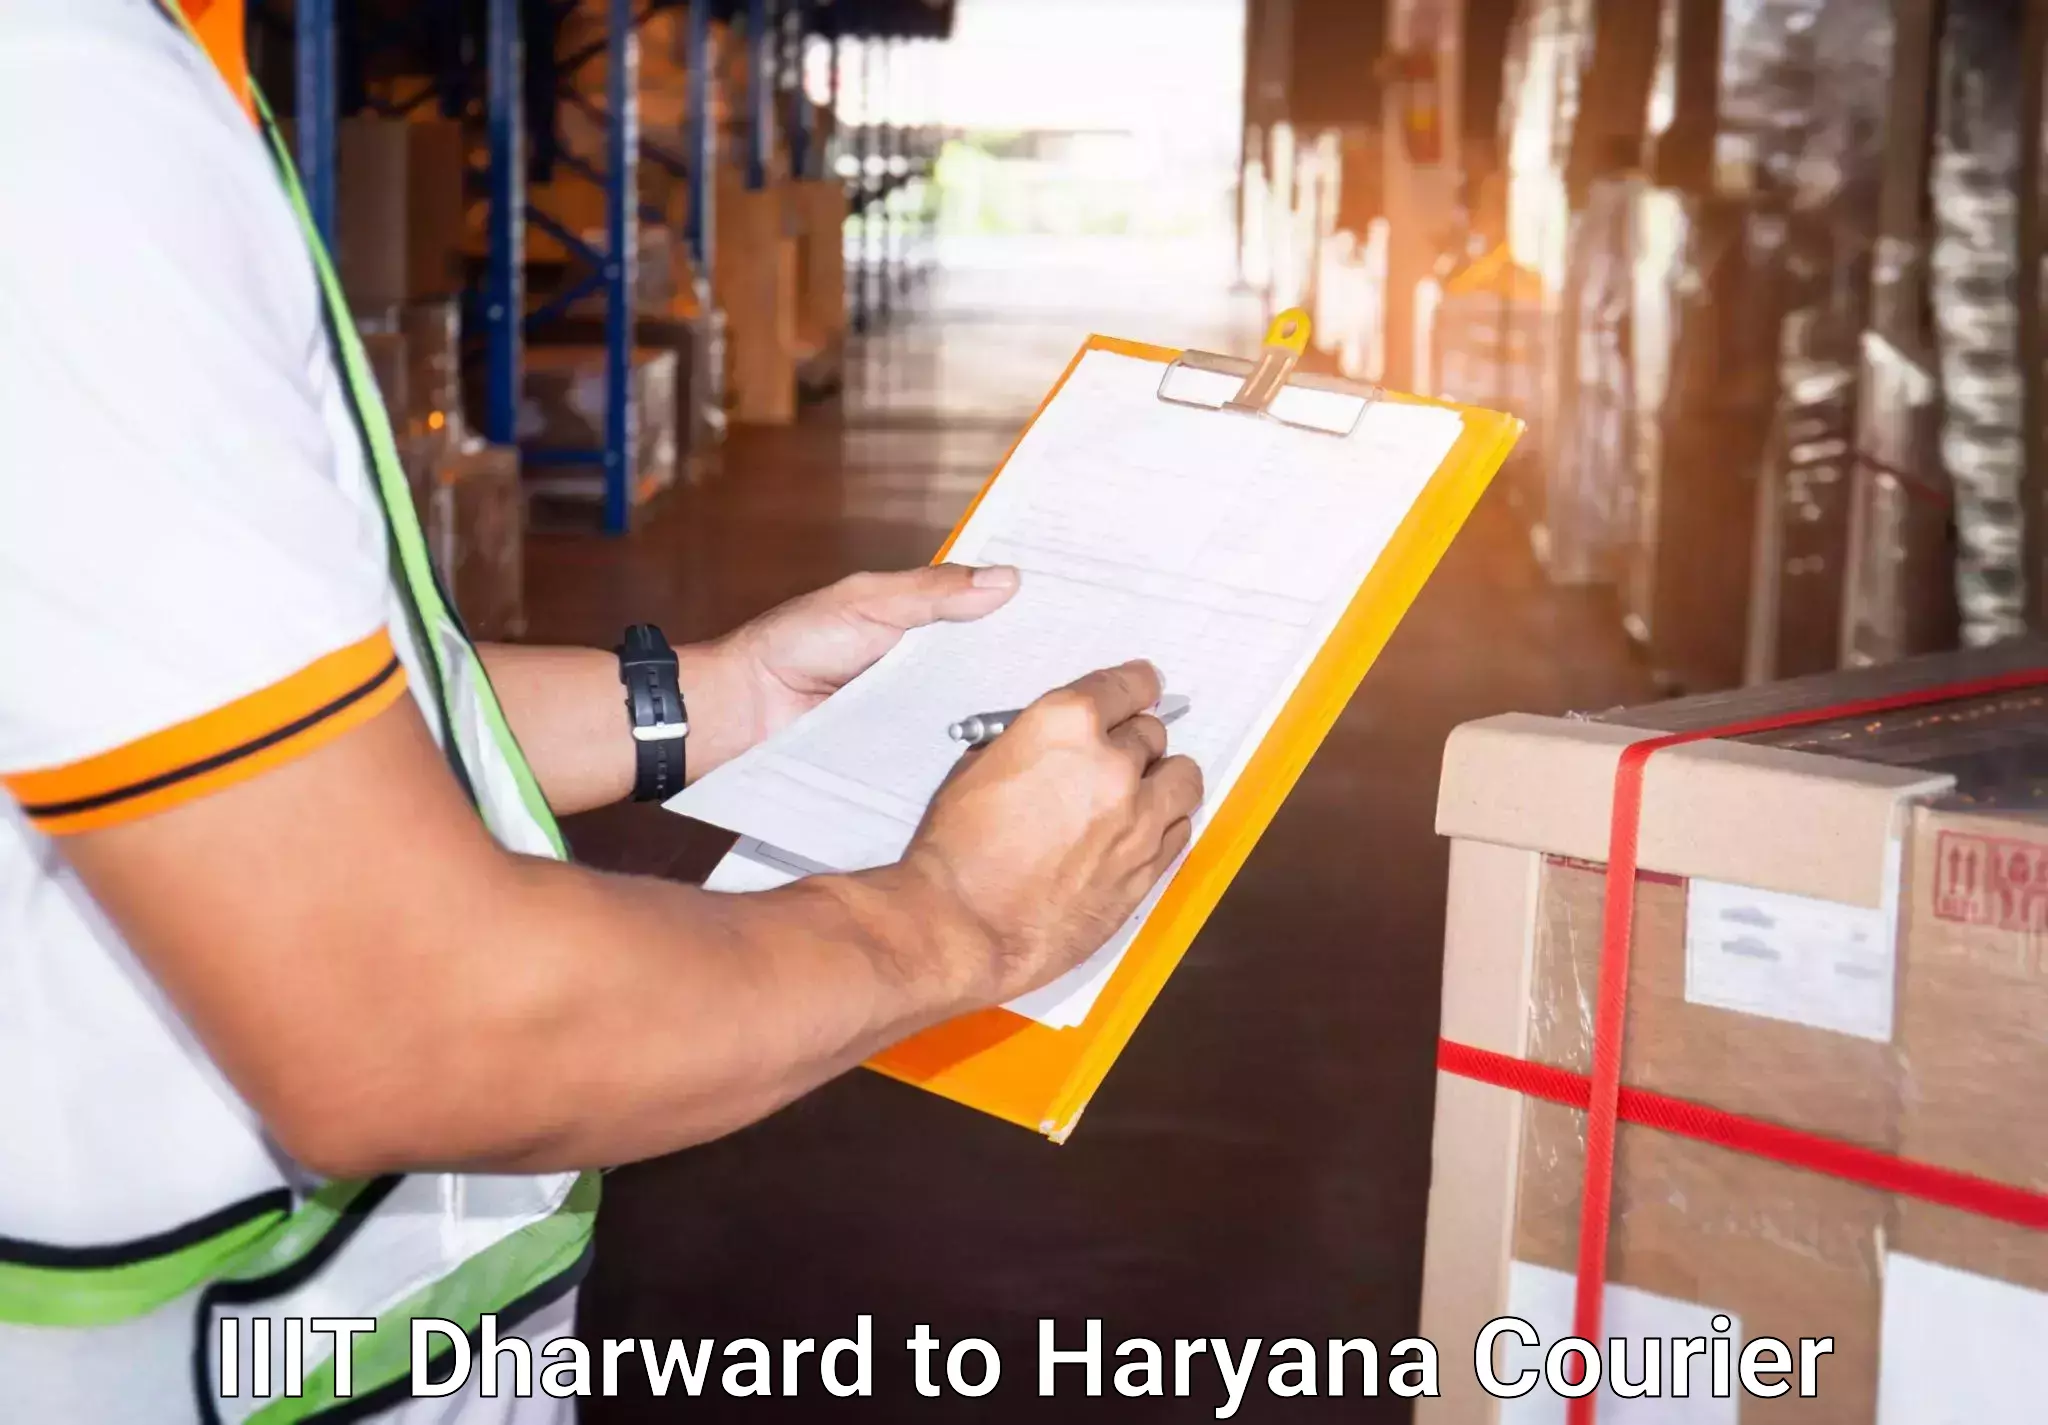 Same day luggage service IIIT Dharward to Bilaspur Haryana